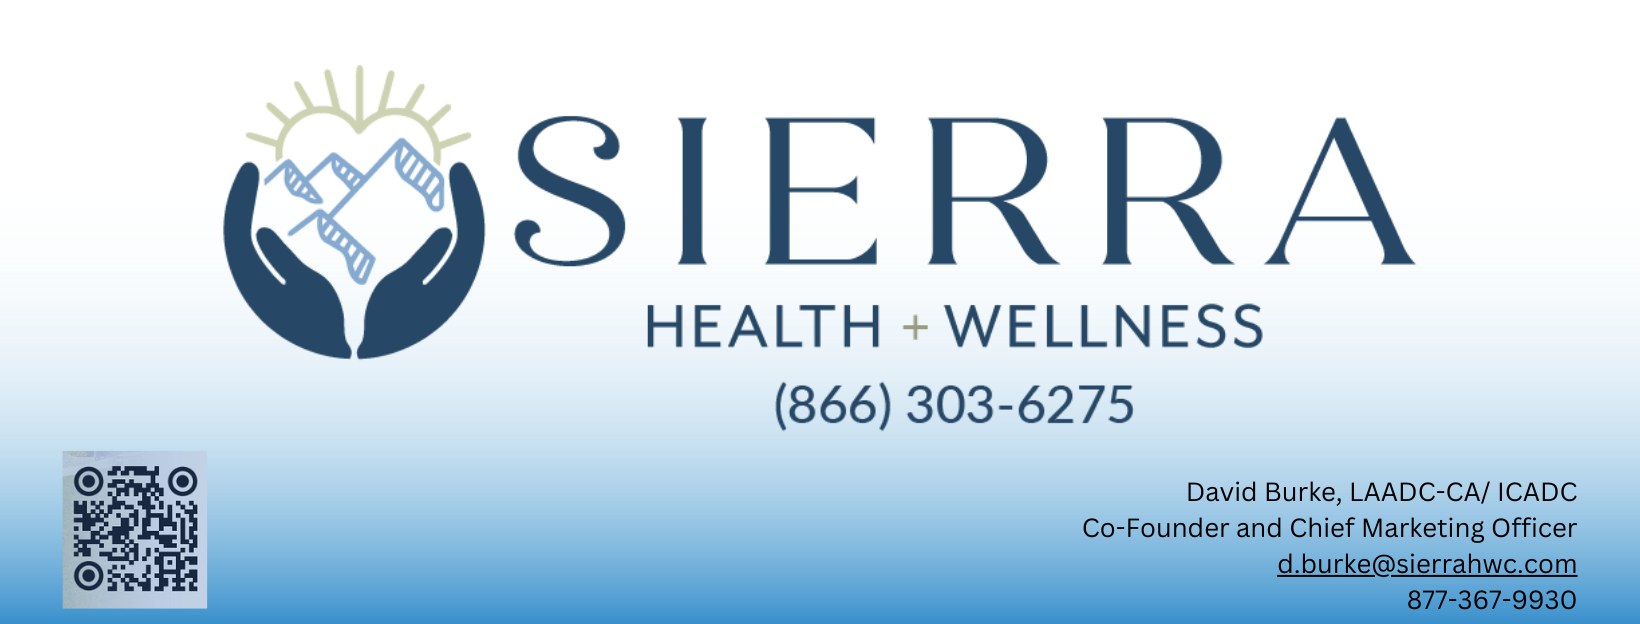 Sierra Health + Wellness